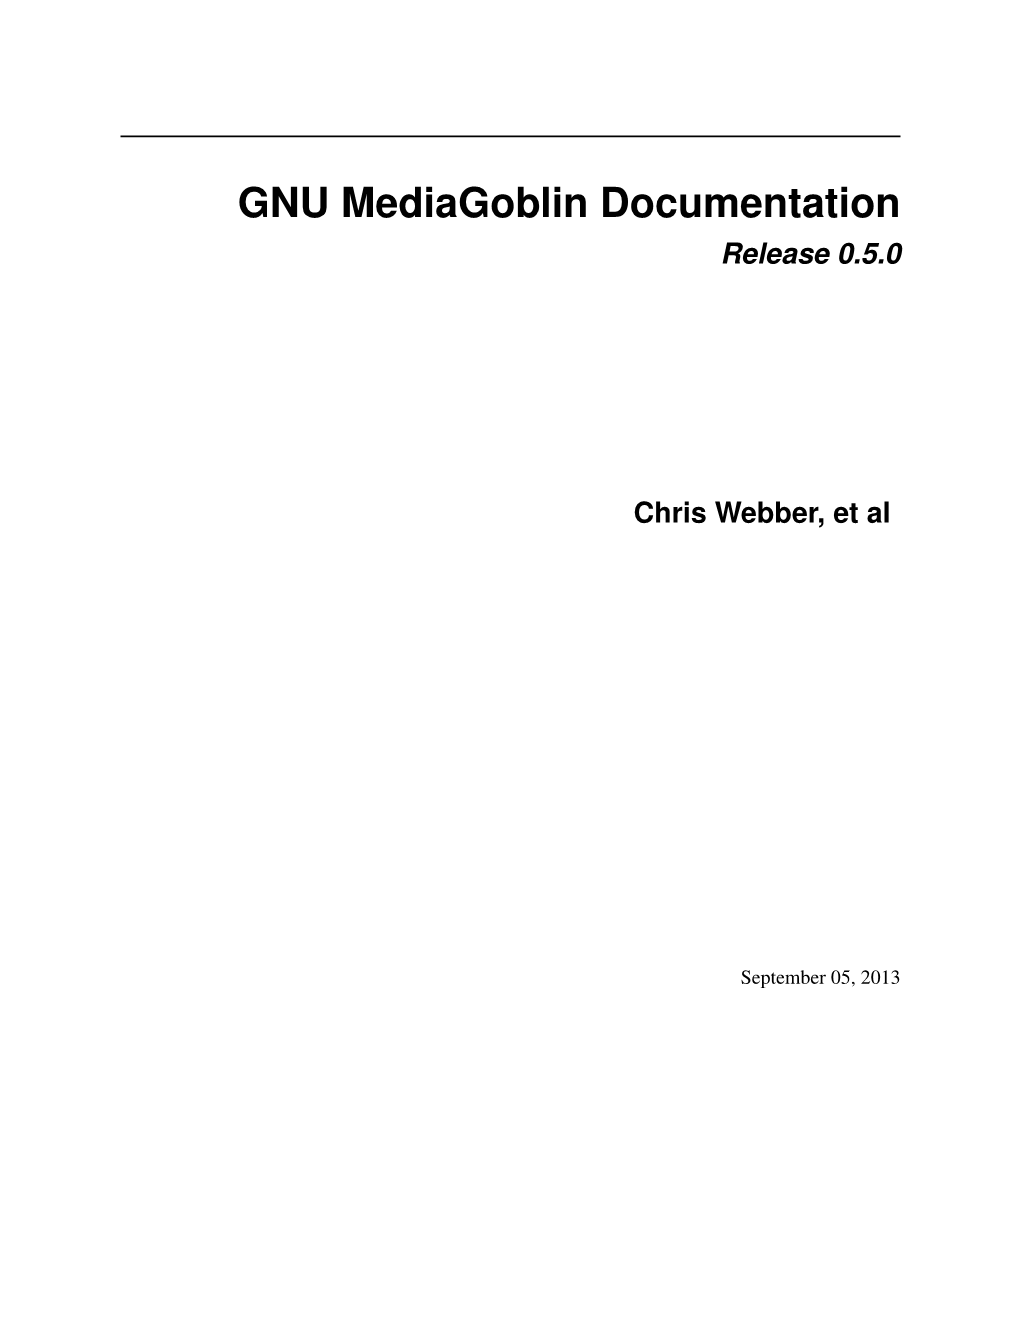 GNU Mediagoblin Documentation Release 0.5.0